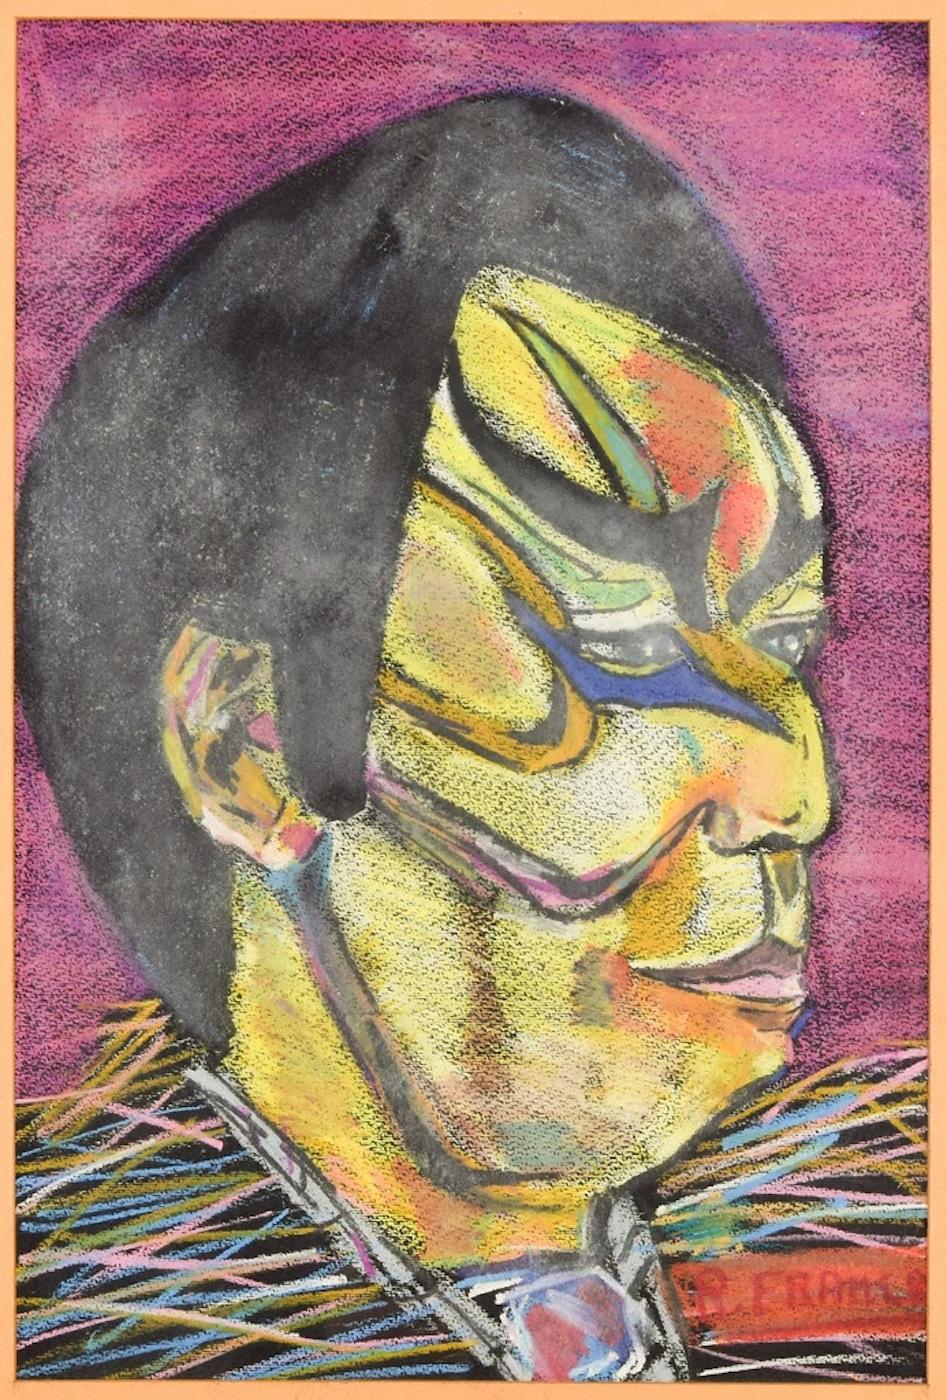 Portrait of Tattooed Man - Original Oil Paste on Canvas - Late 20th Century